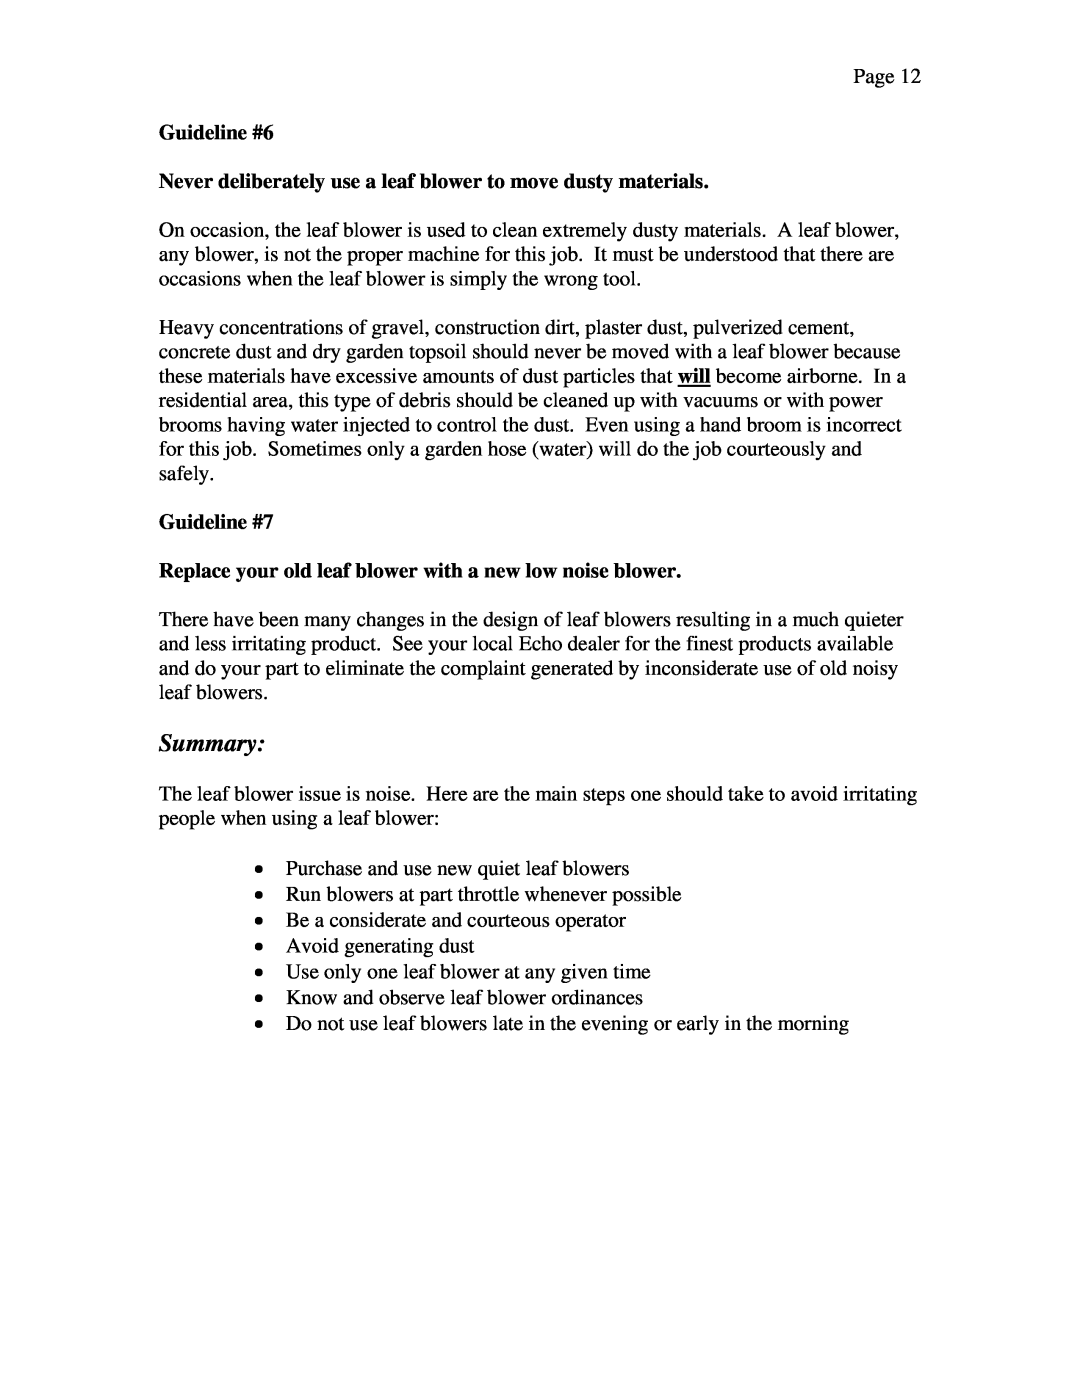 Echo LEAF BLOWER manual Summary, Guideline #6, Guideline #7 